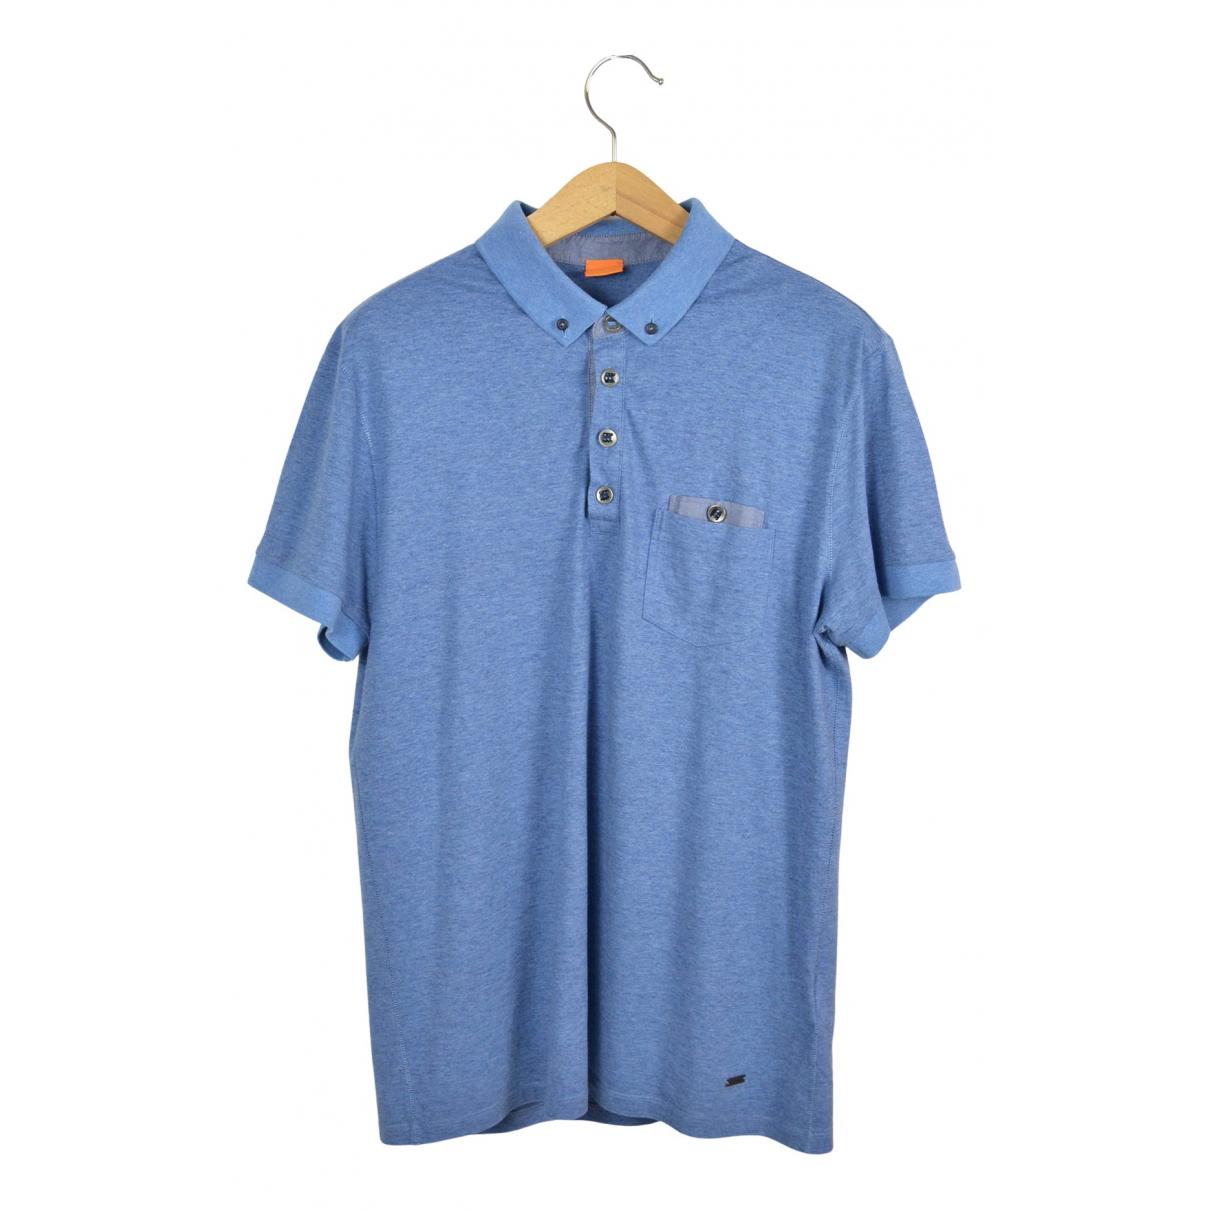 Orange L - Cotton in shirt Boss International size Blue 22881868 Polo